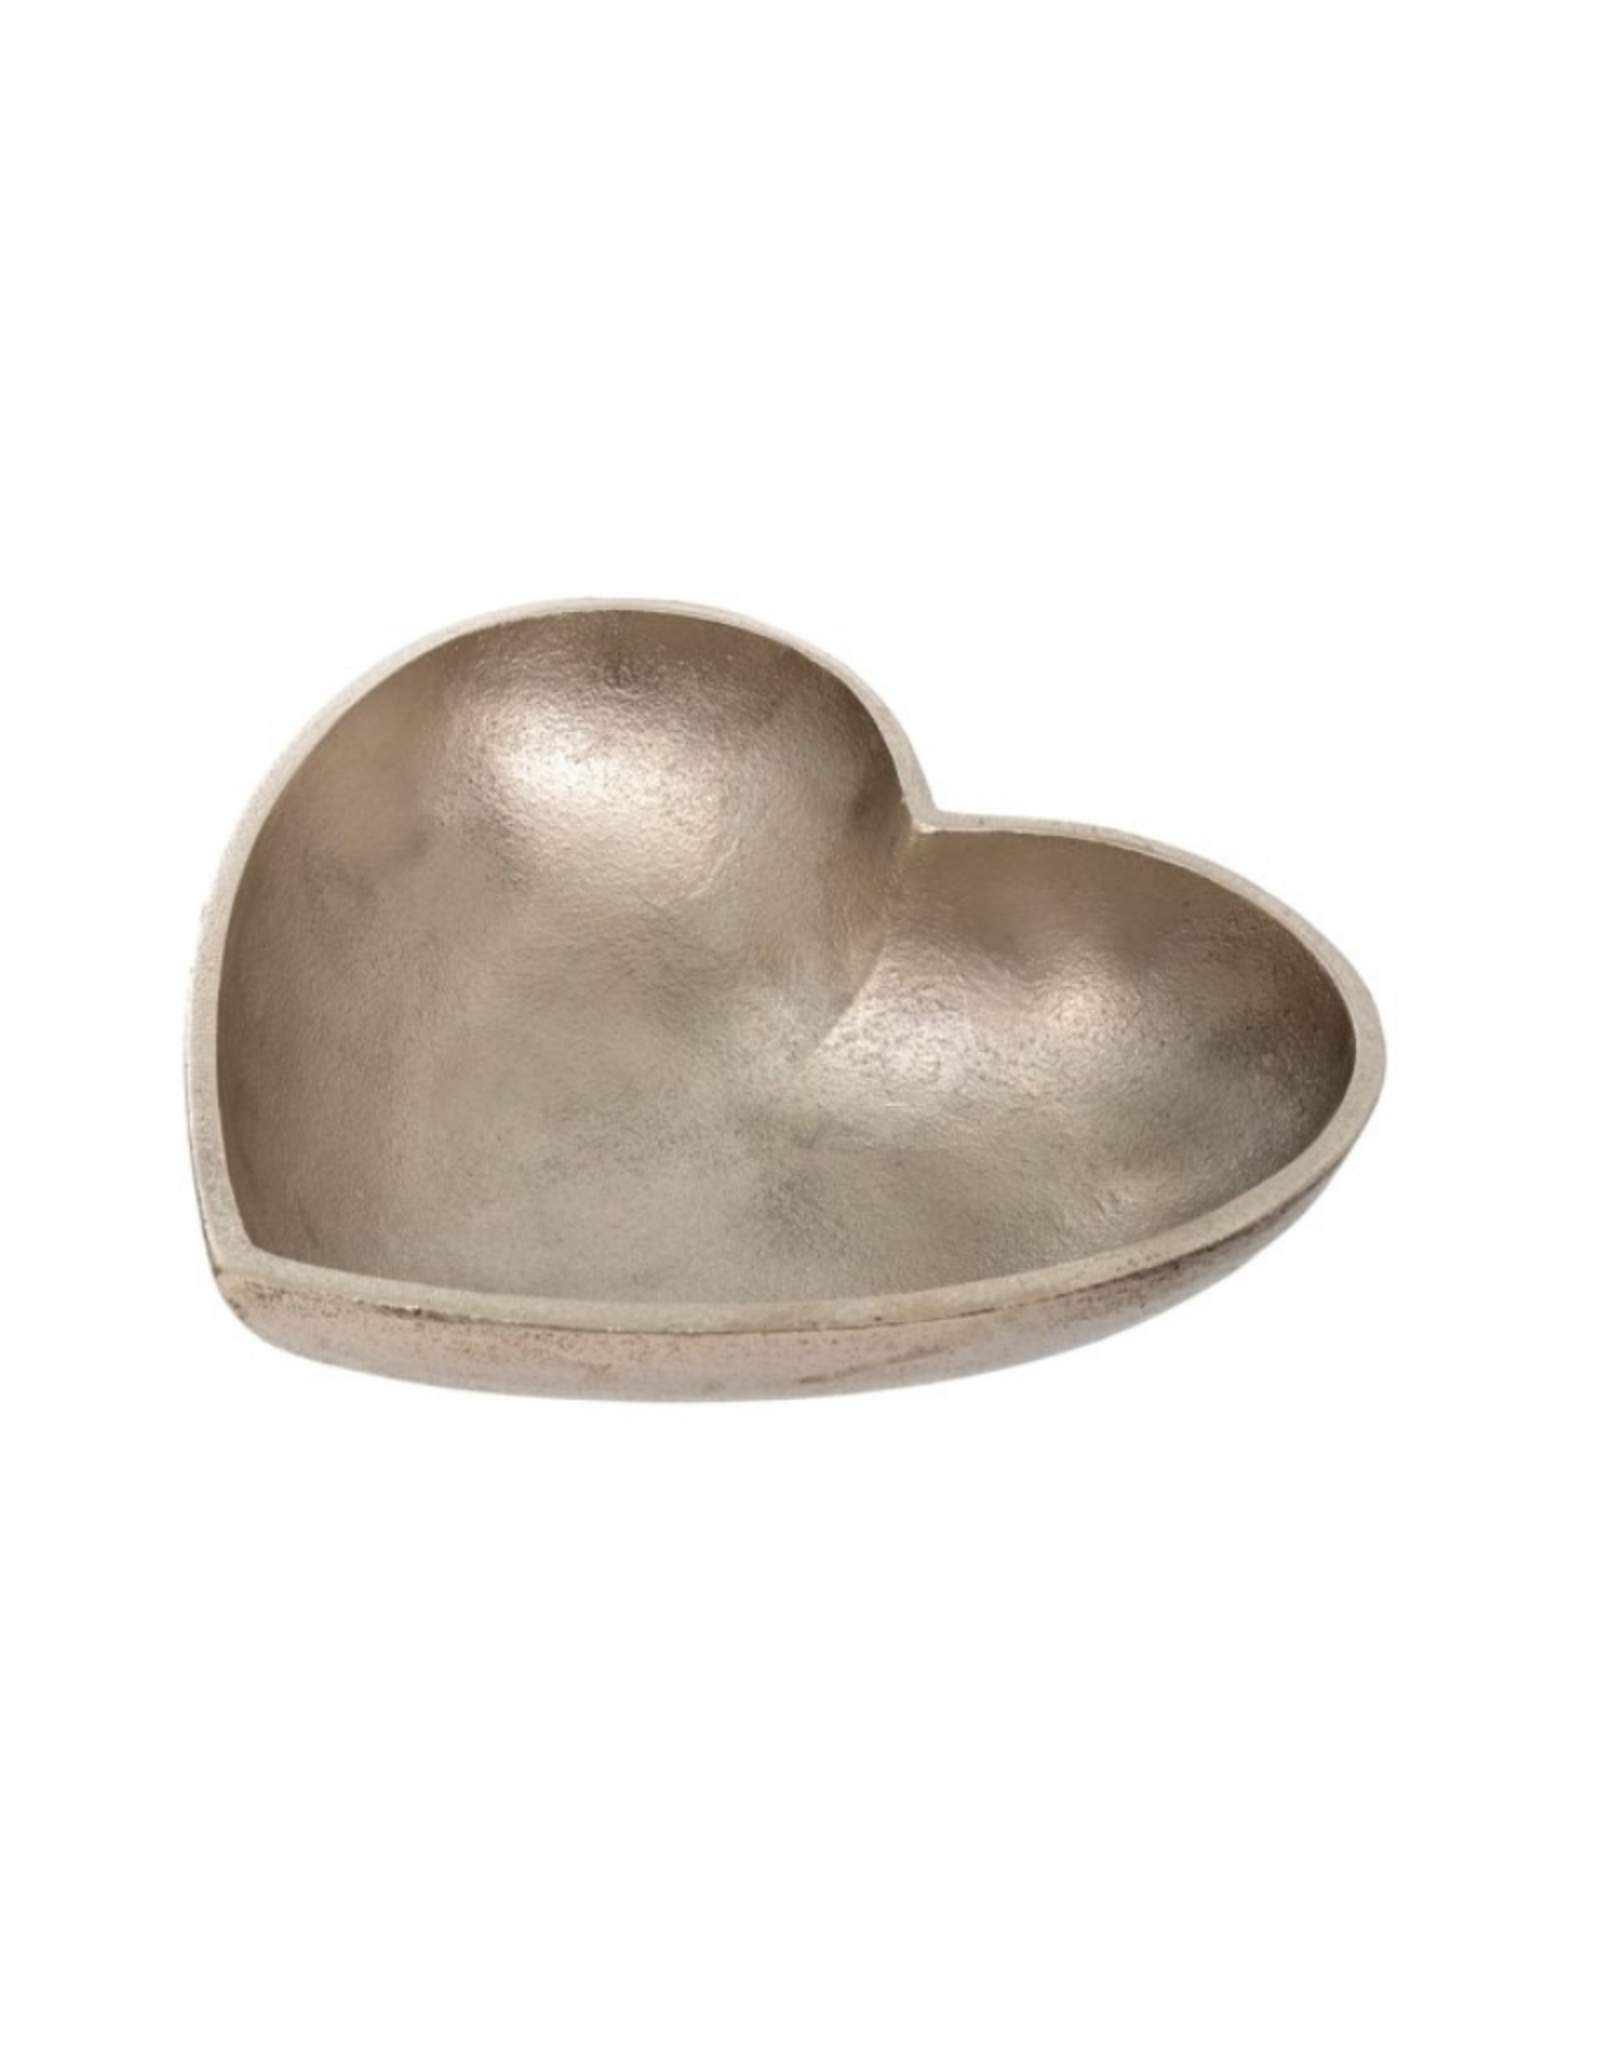 Silver Heart Bowl